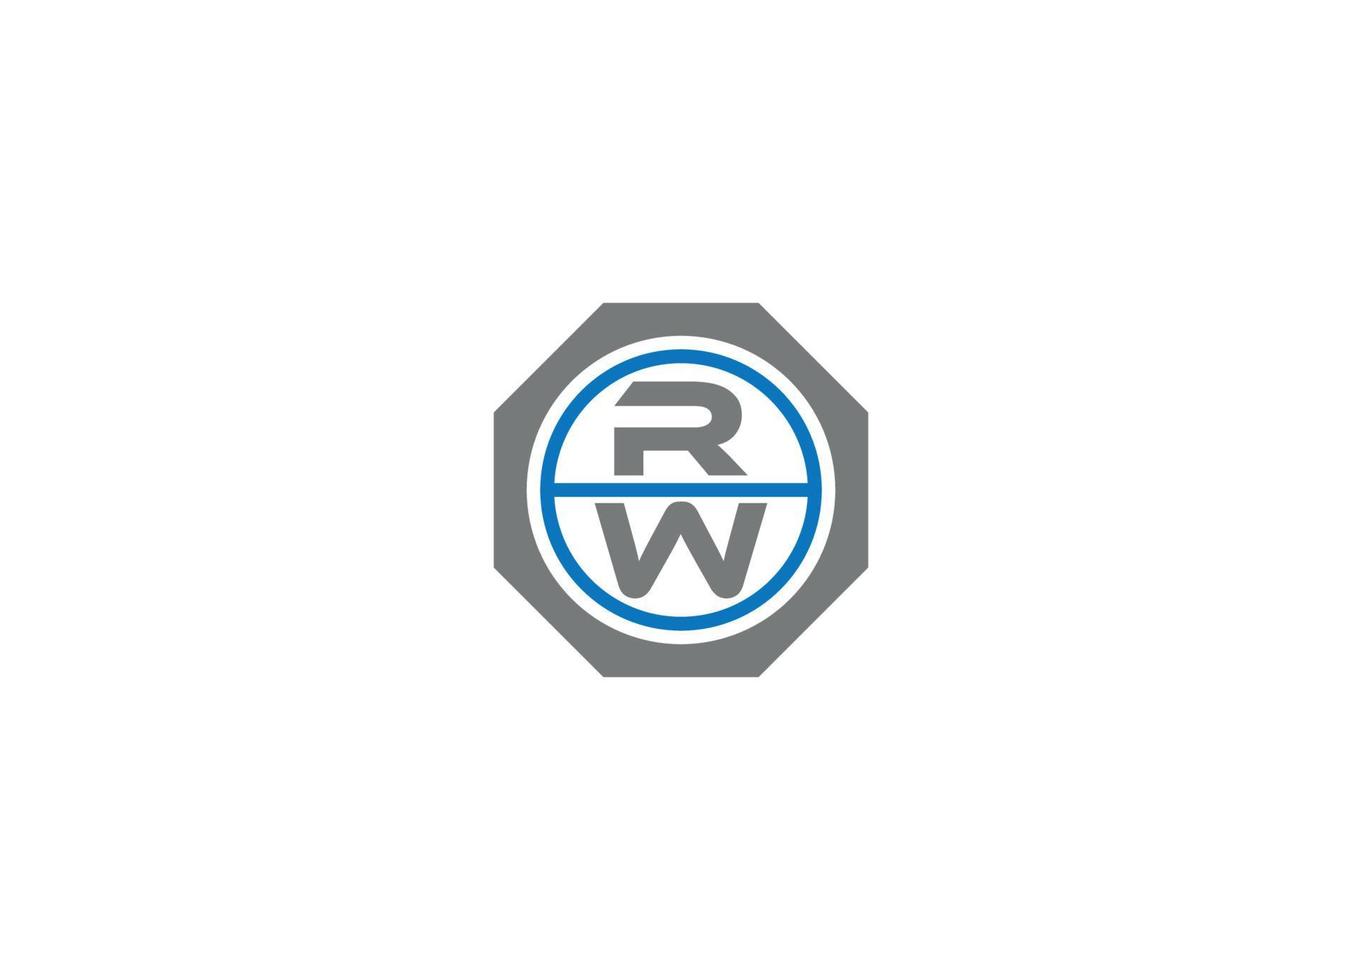 rw moderne Logo-Design-Vektorsymbol-Vorlage vektor